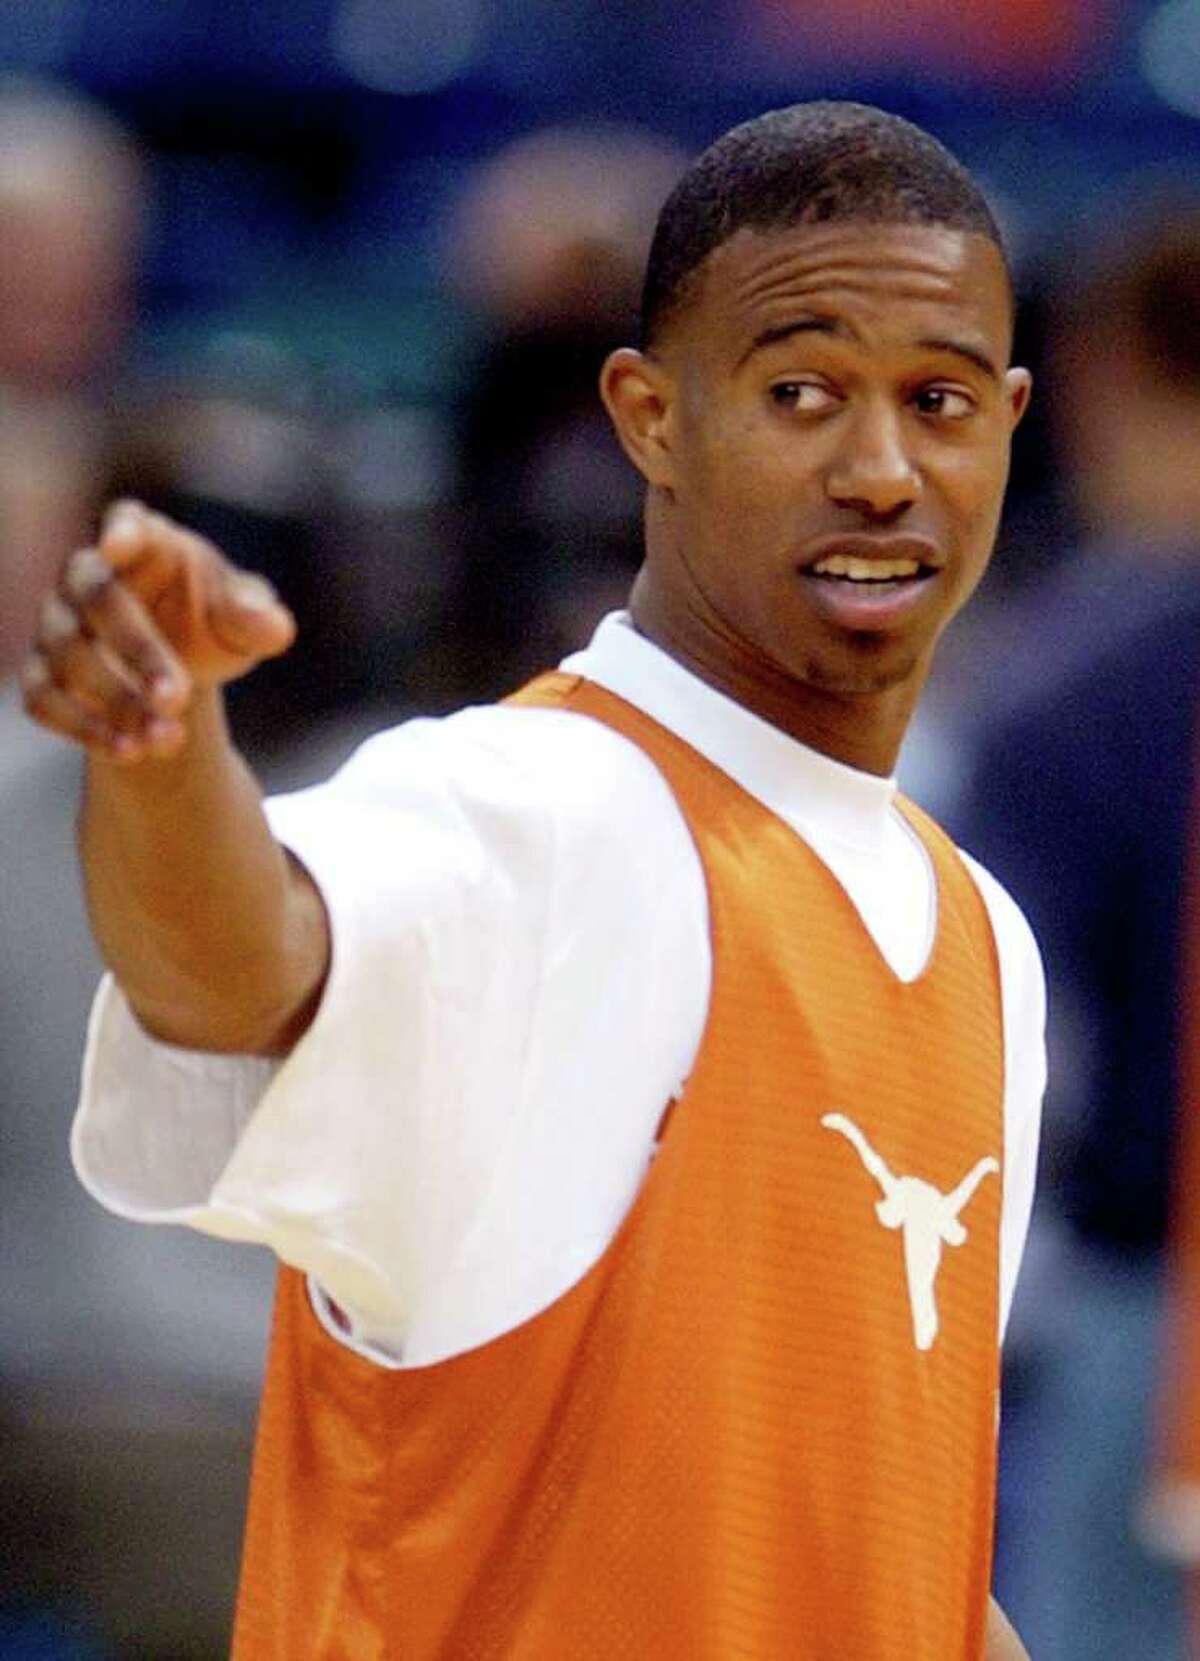 Houston native and Spurs guard T.J. Ford surprisingly announces retirement